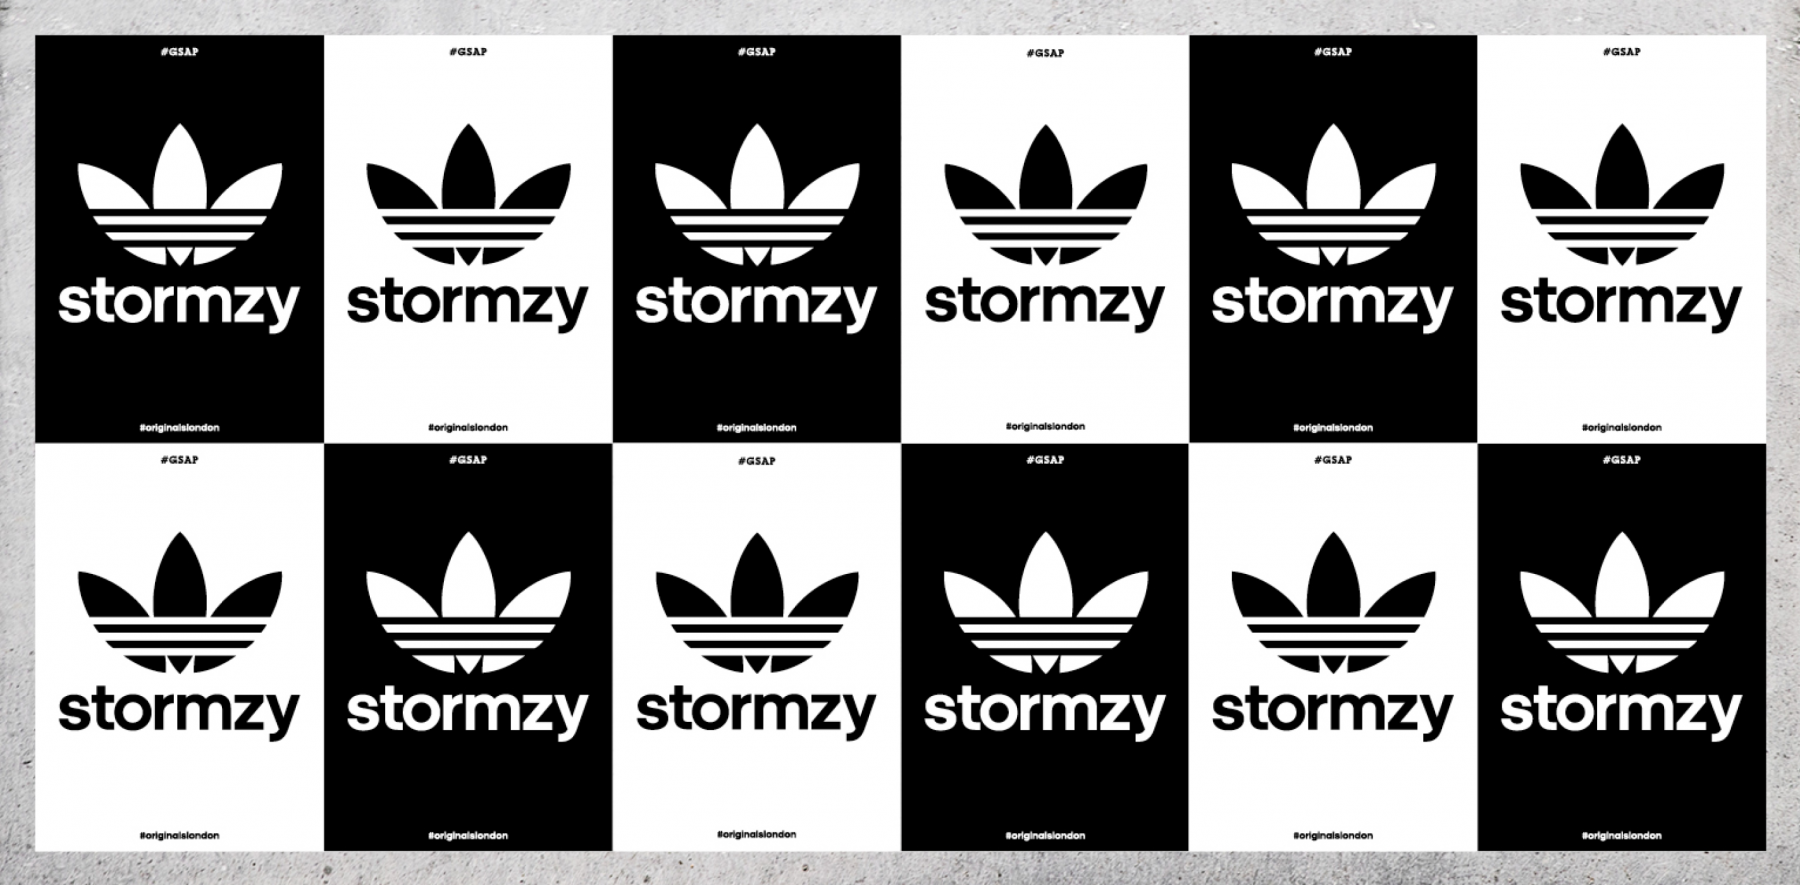 adidas Originals - Stormzy in the adidas Originals x NIGO bear graphic,  dropping in September.